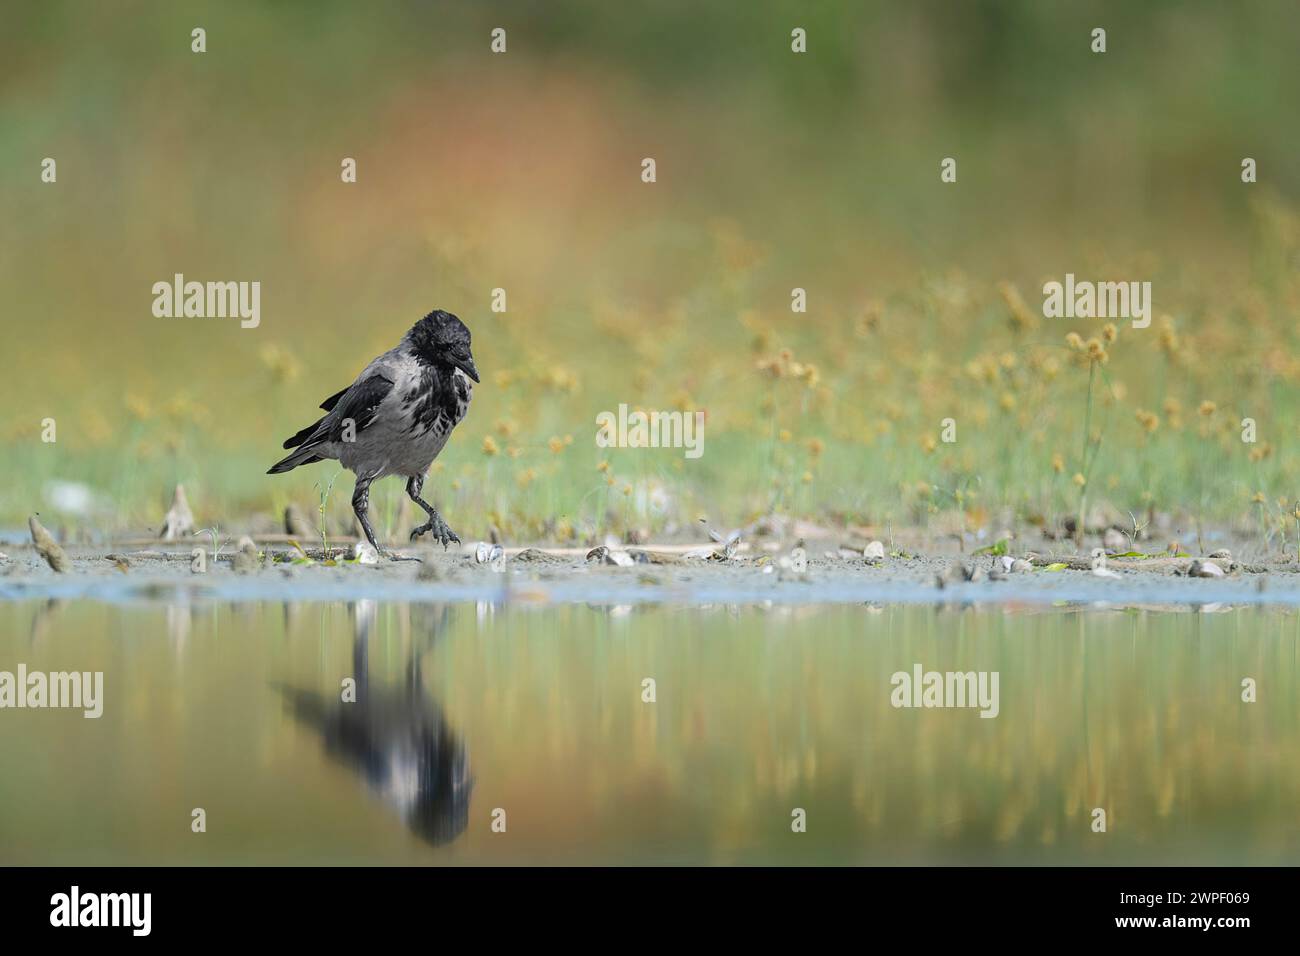 At mirror, the hooded crow (Corvus cornix) Stock Photo